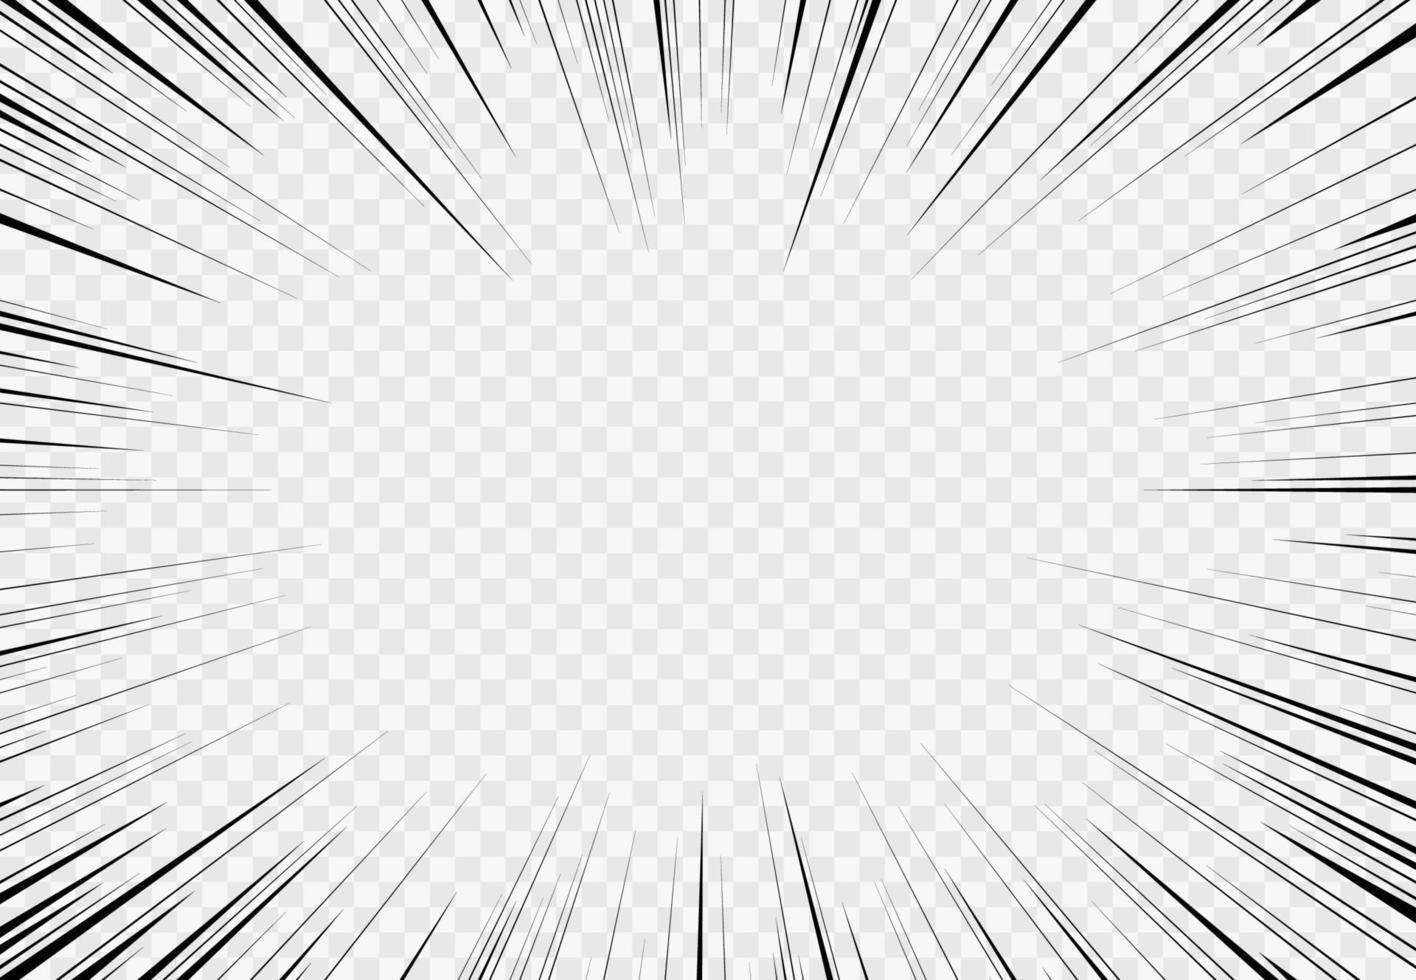 Manga transparent background, explosion motion vector